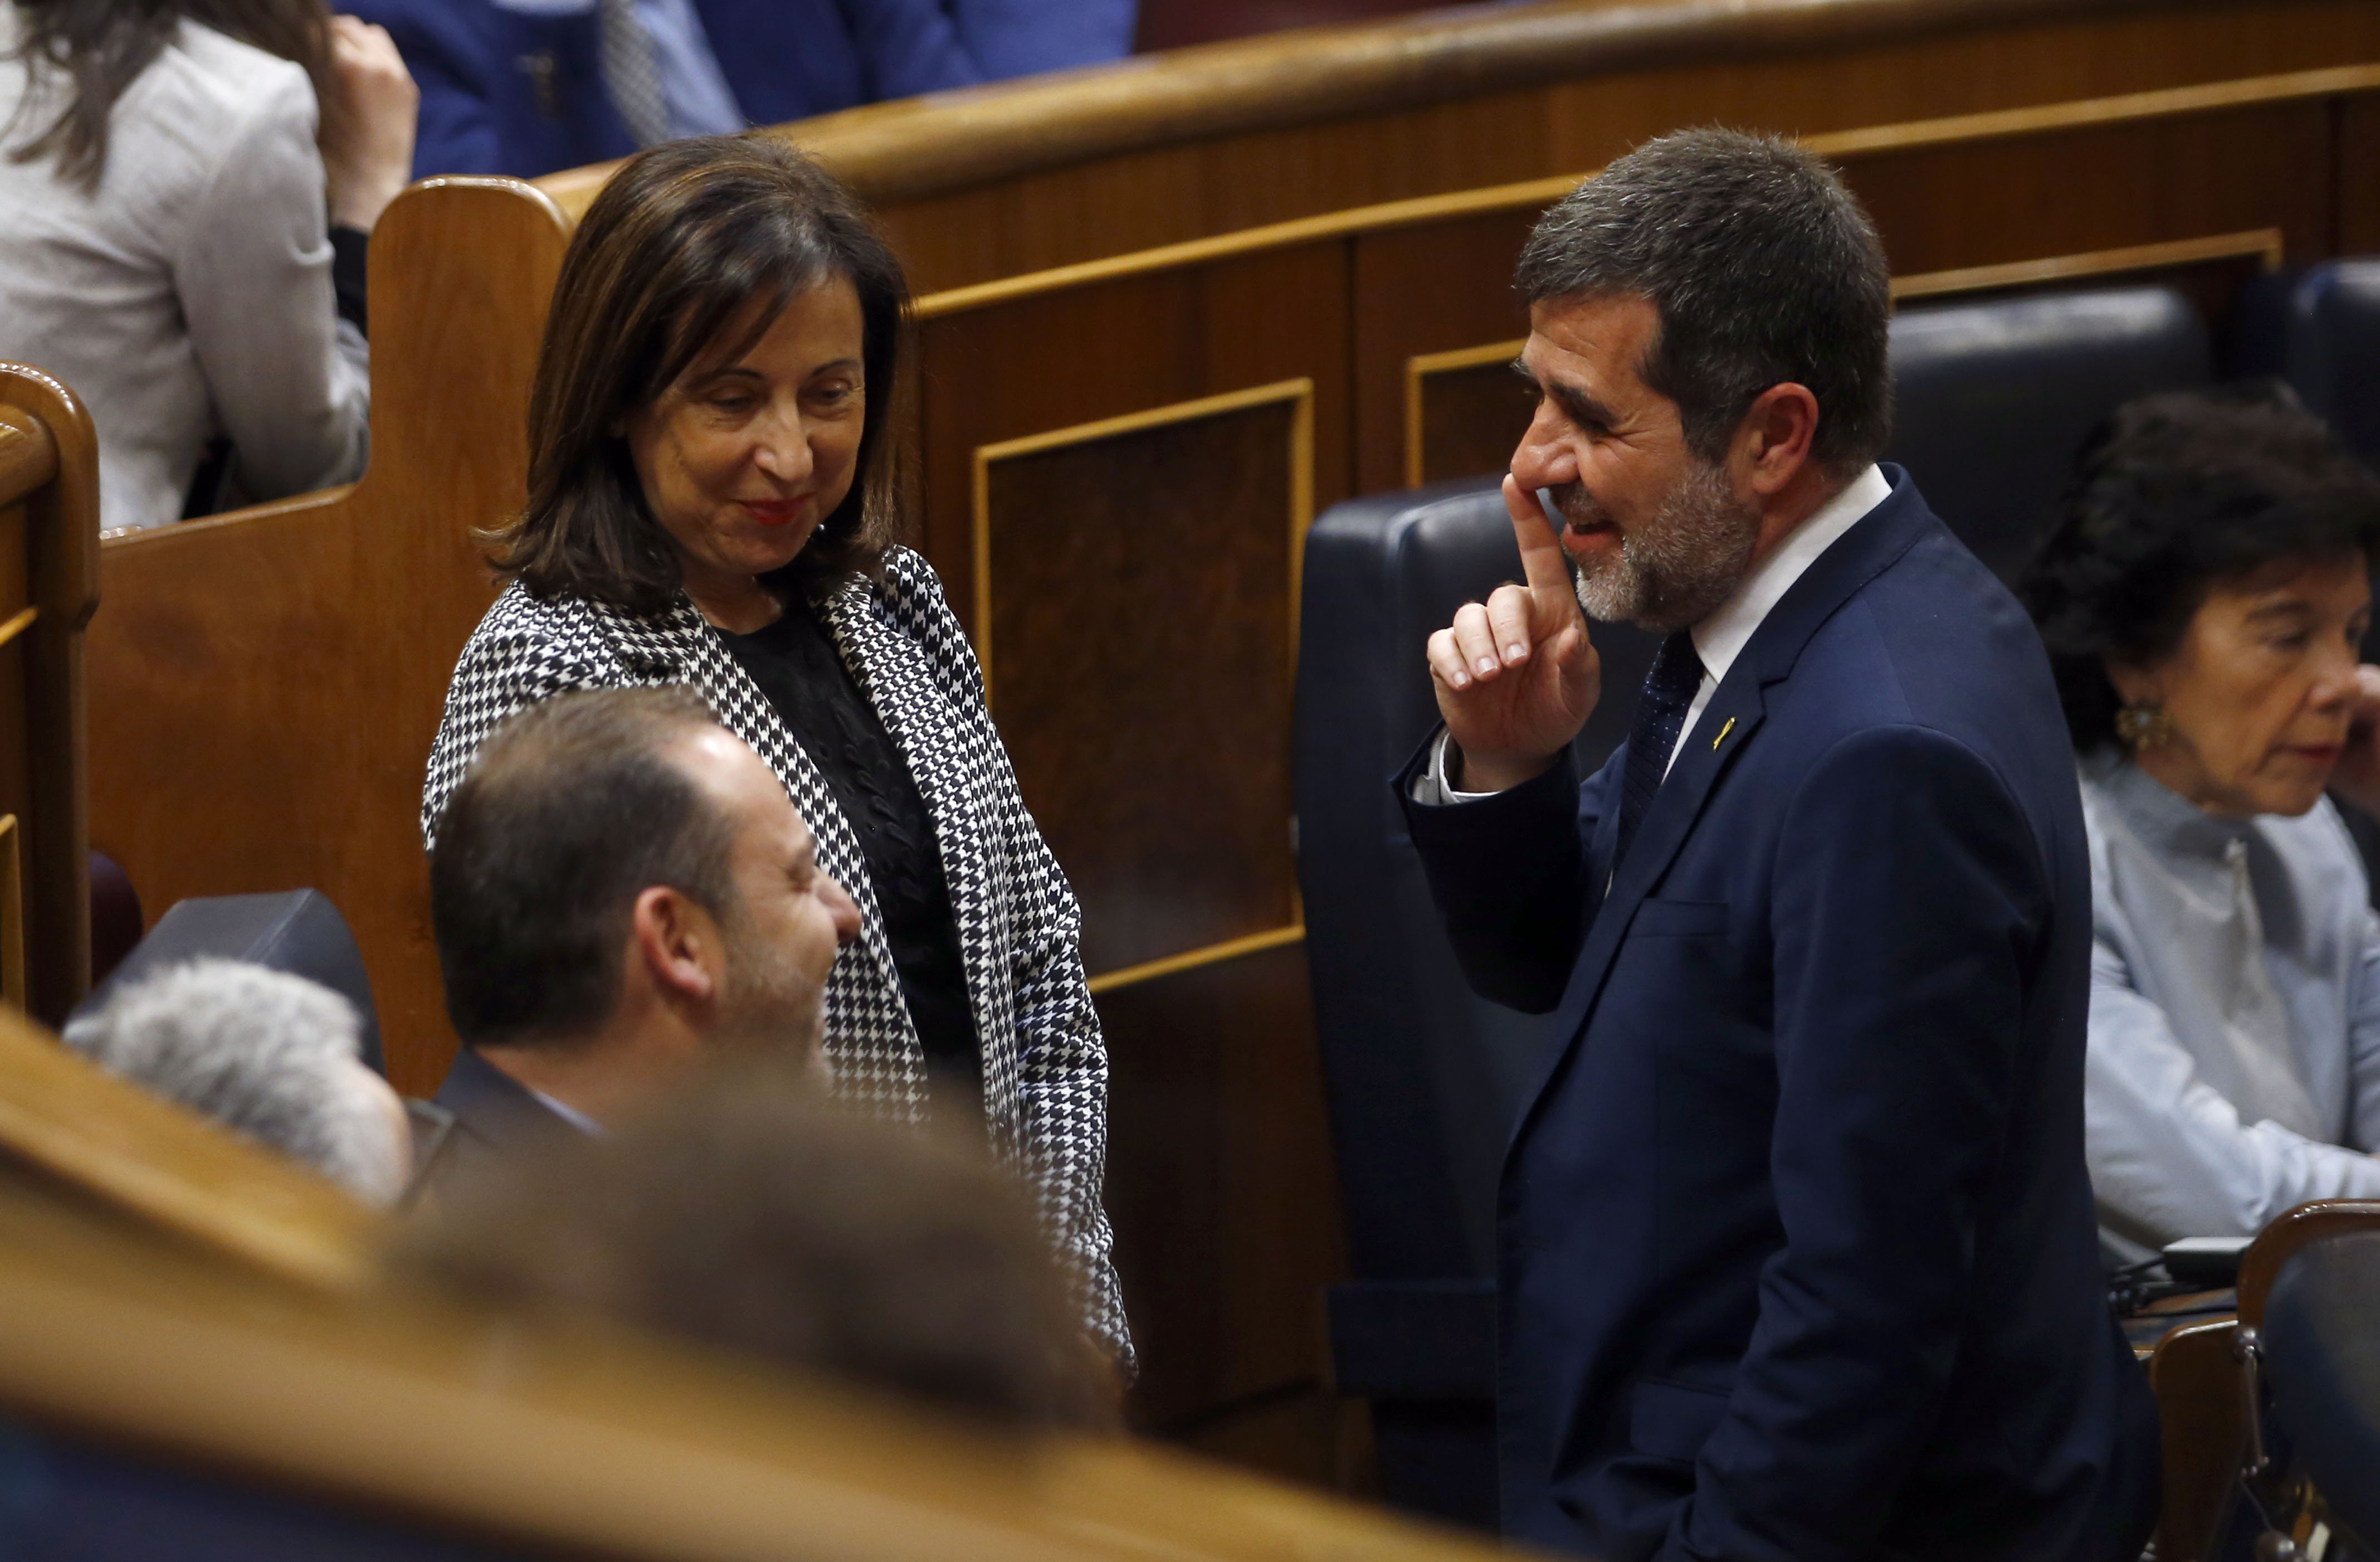 Jailed JxCat politician Jordi Sànchez at the parliamentary inauguration on May 21 (Javier Barnancho/ACN)